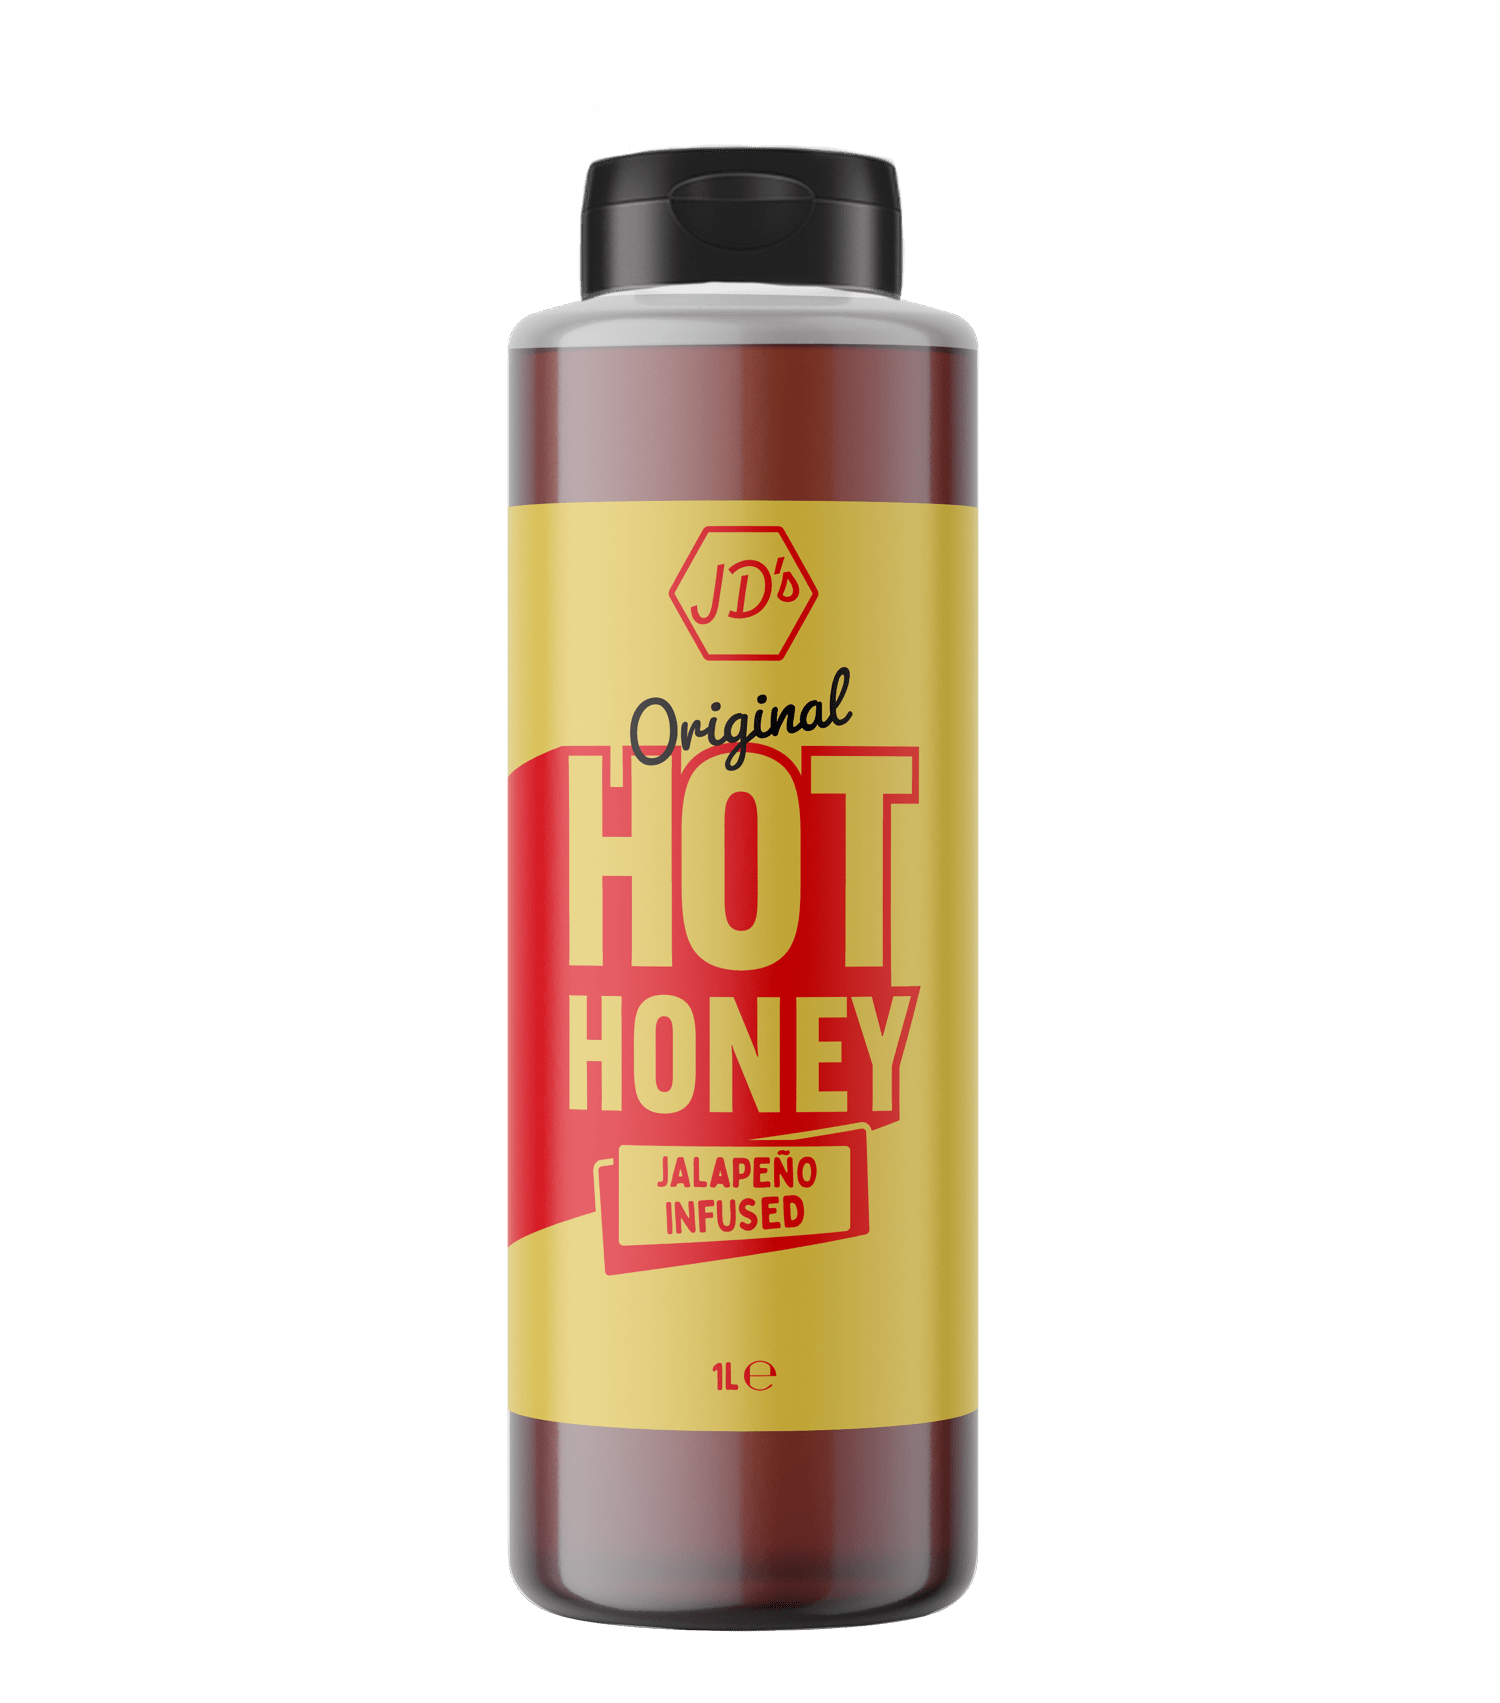 JD's Hot Honey Original - 1 Litre Big Bottle - JD's Hot Honey